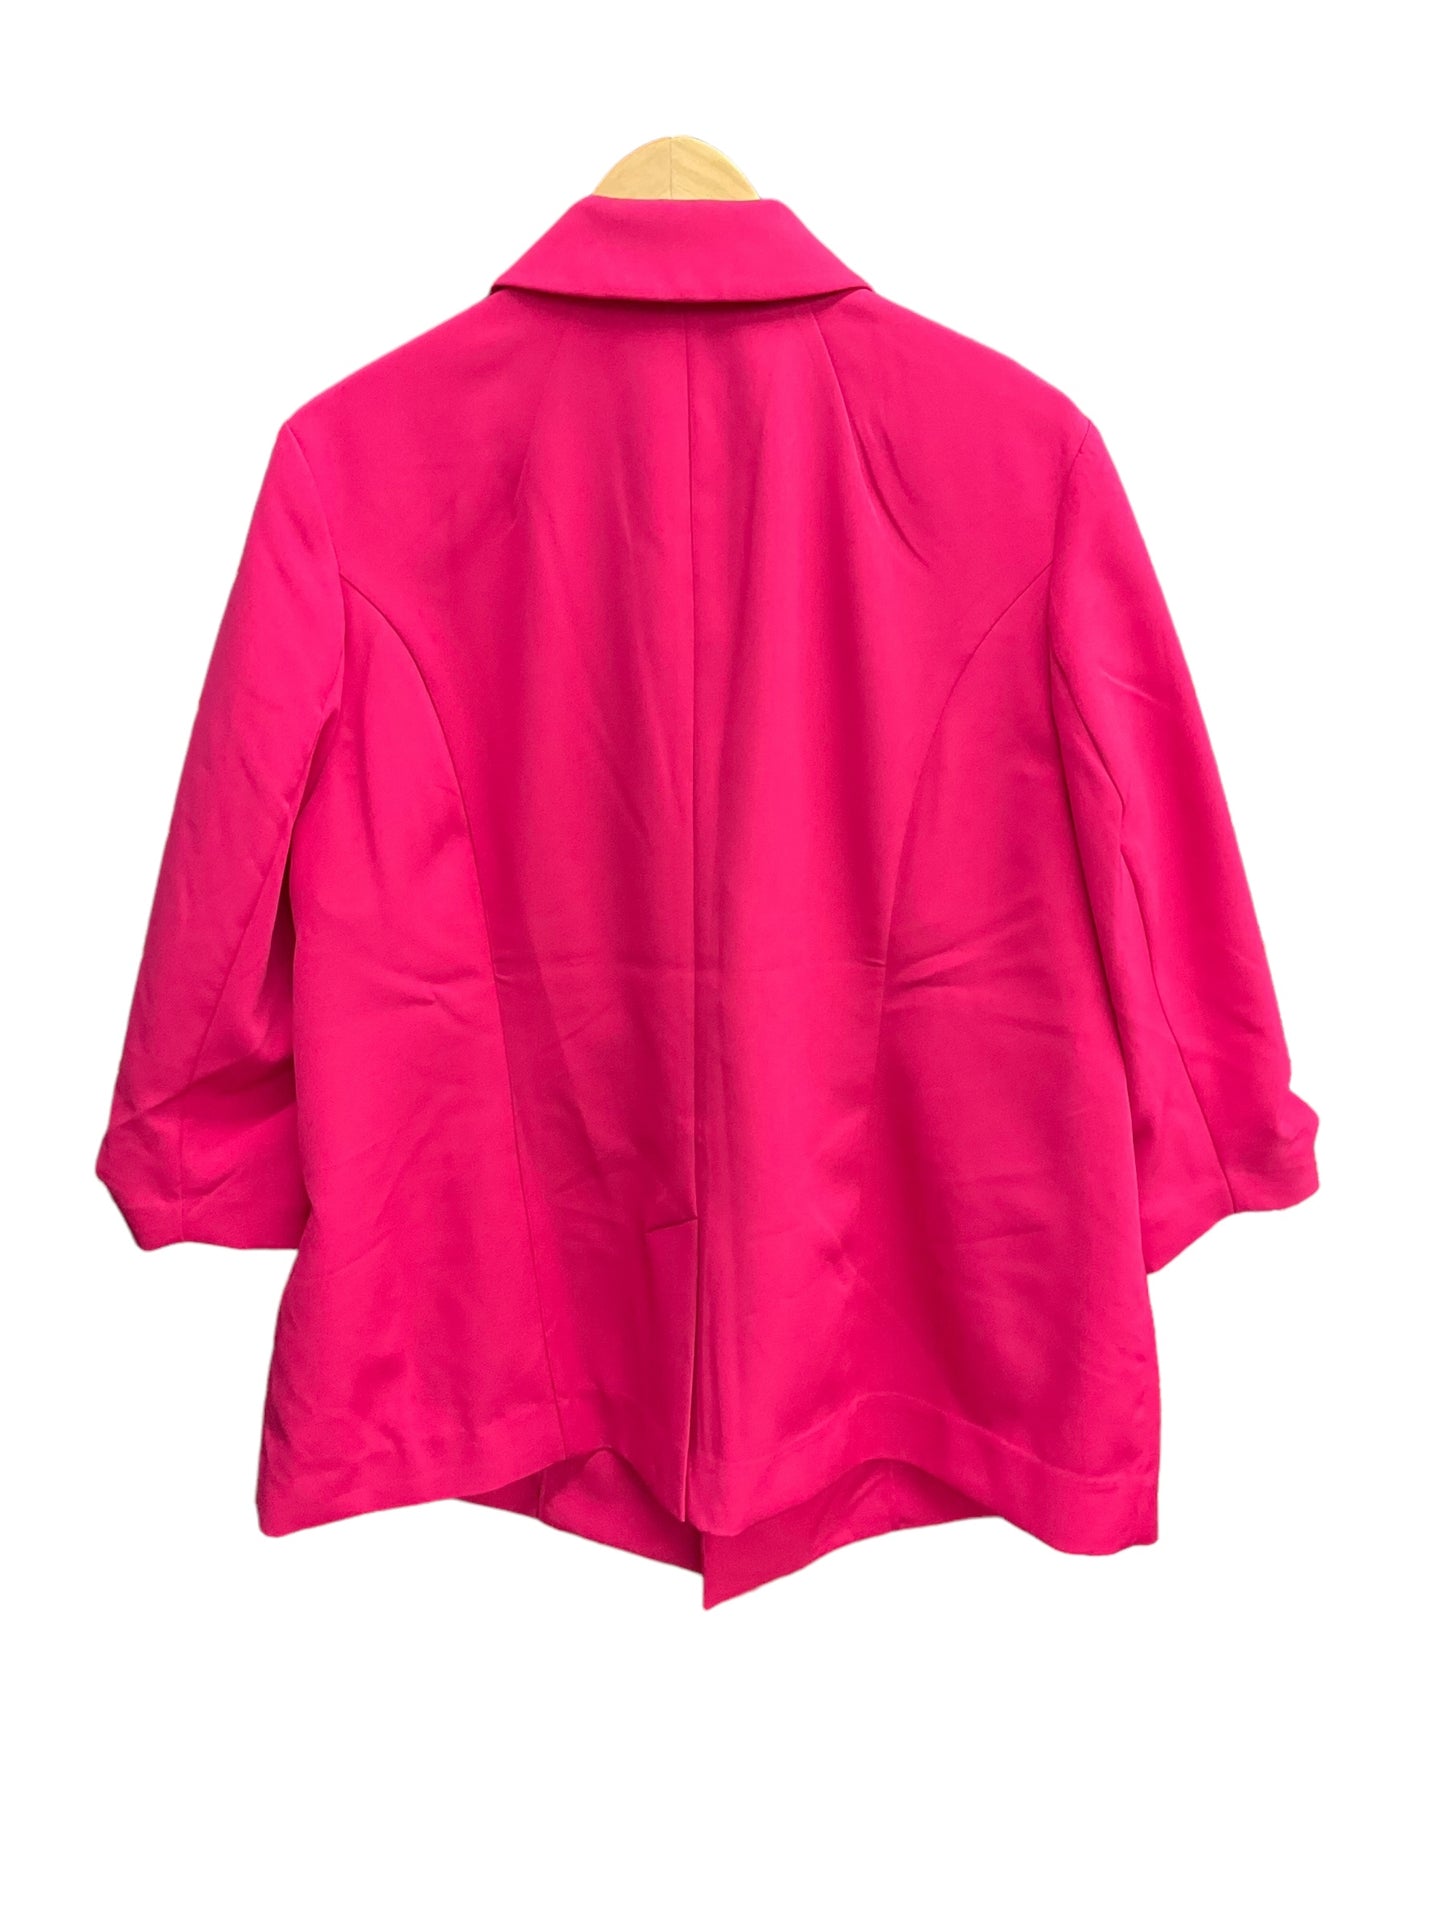 Pink Blazer International Concepts, Size 2x